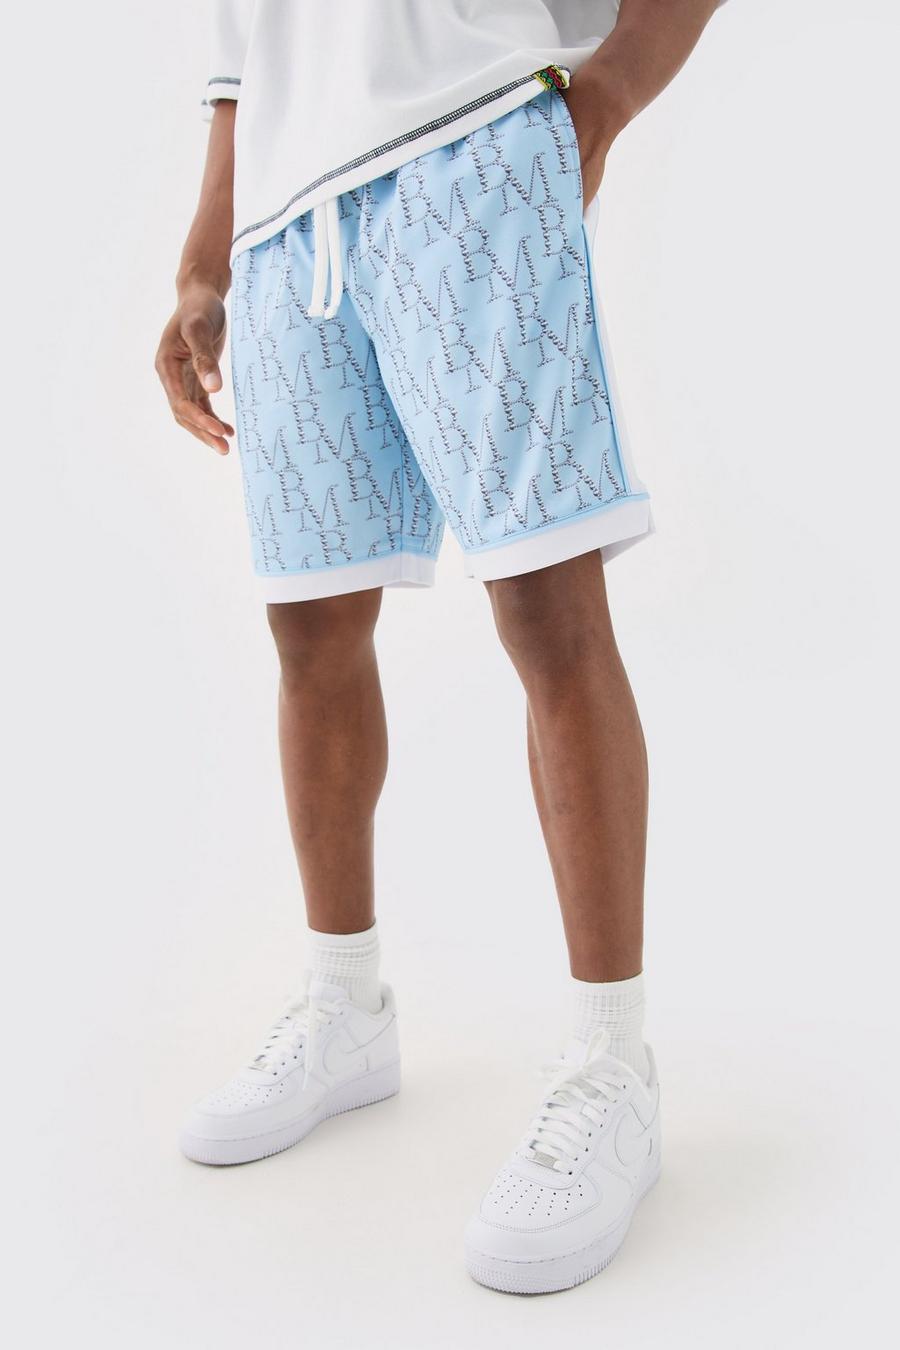 Lockere Mesh Basketball-Shorts mit Bm Print, Light blue